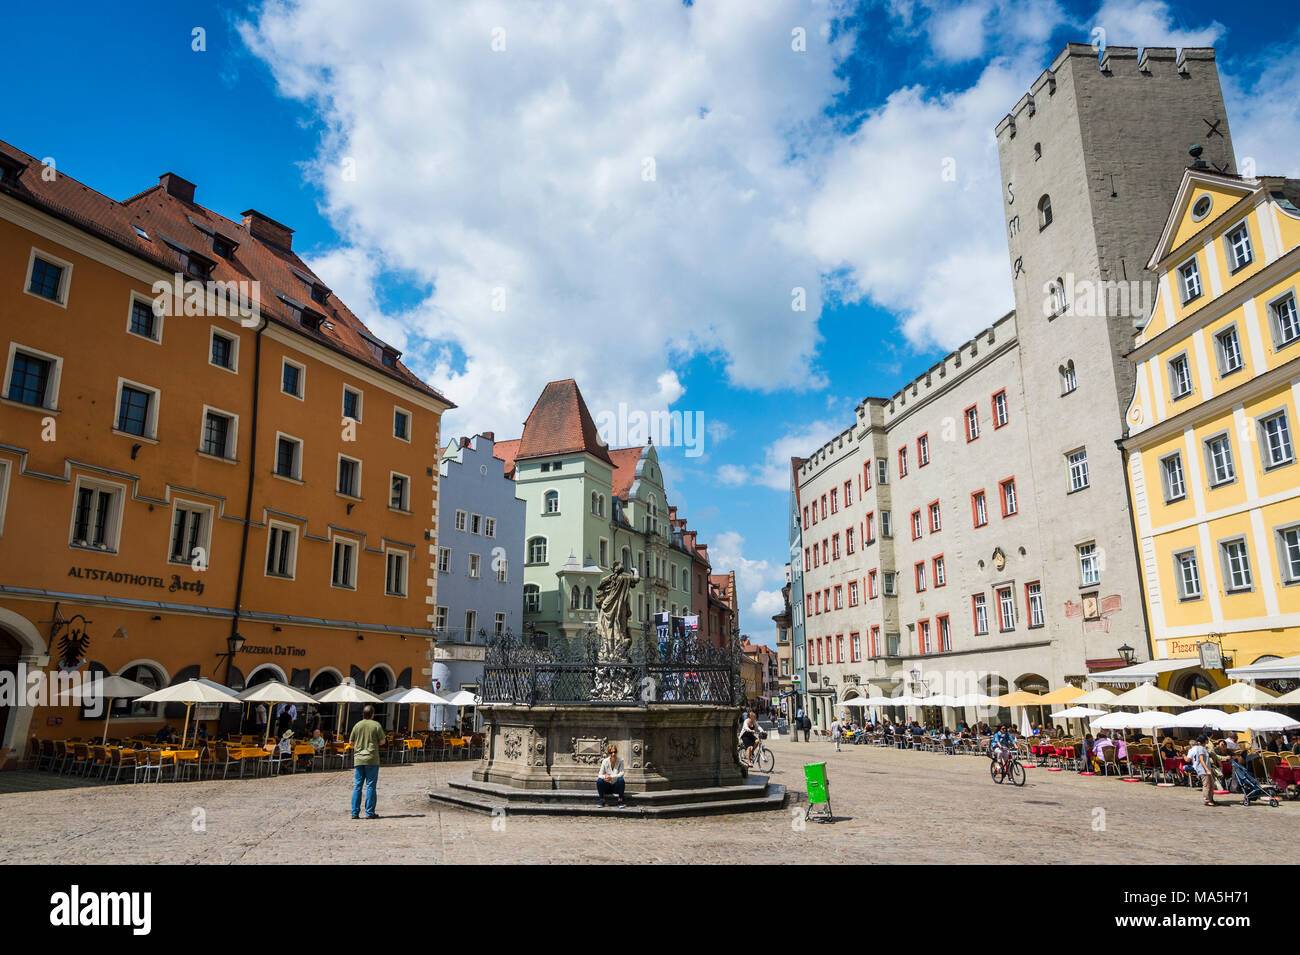 Haidplatz, square with Unesco world heritage sight, Regensburg, Bavaria, Germany Stock Photo